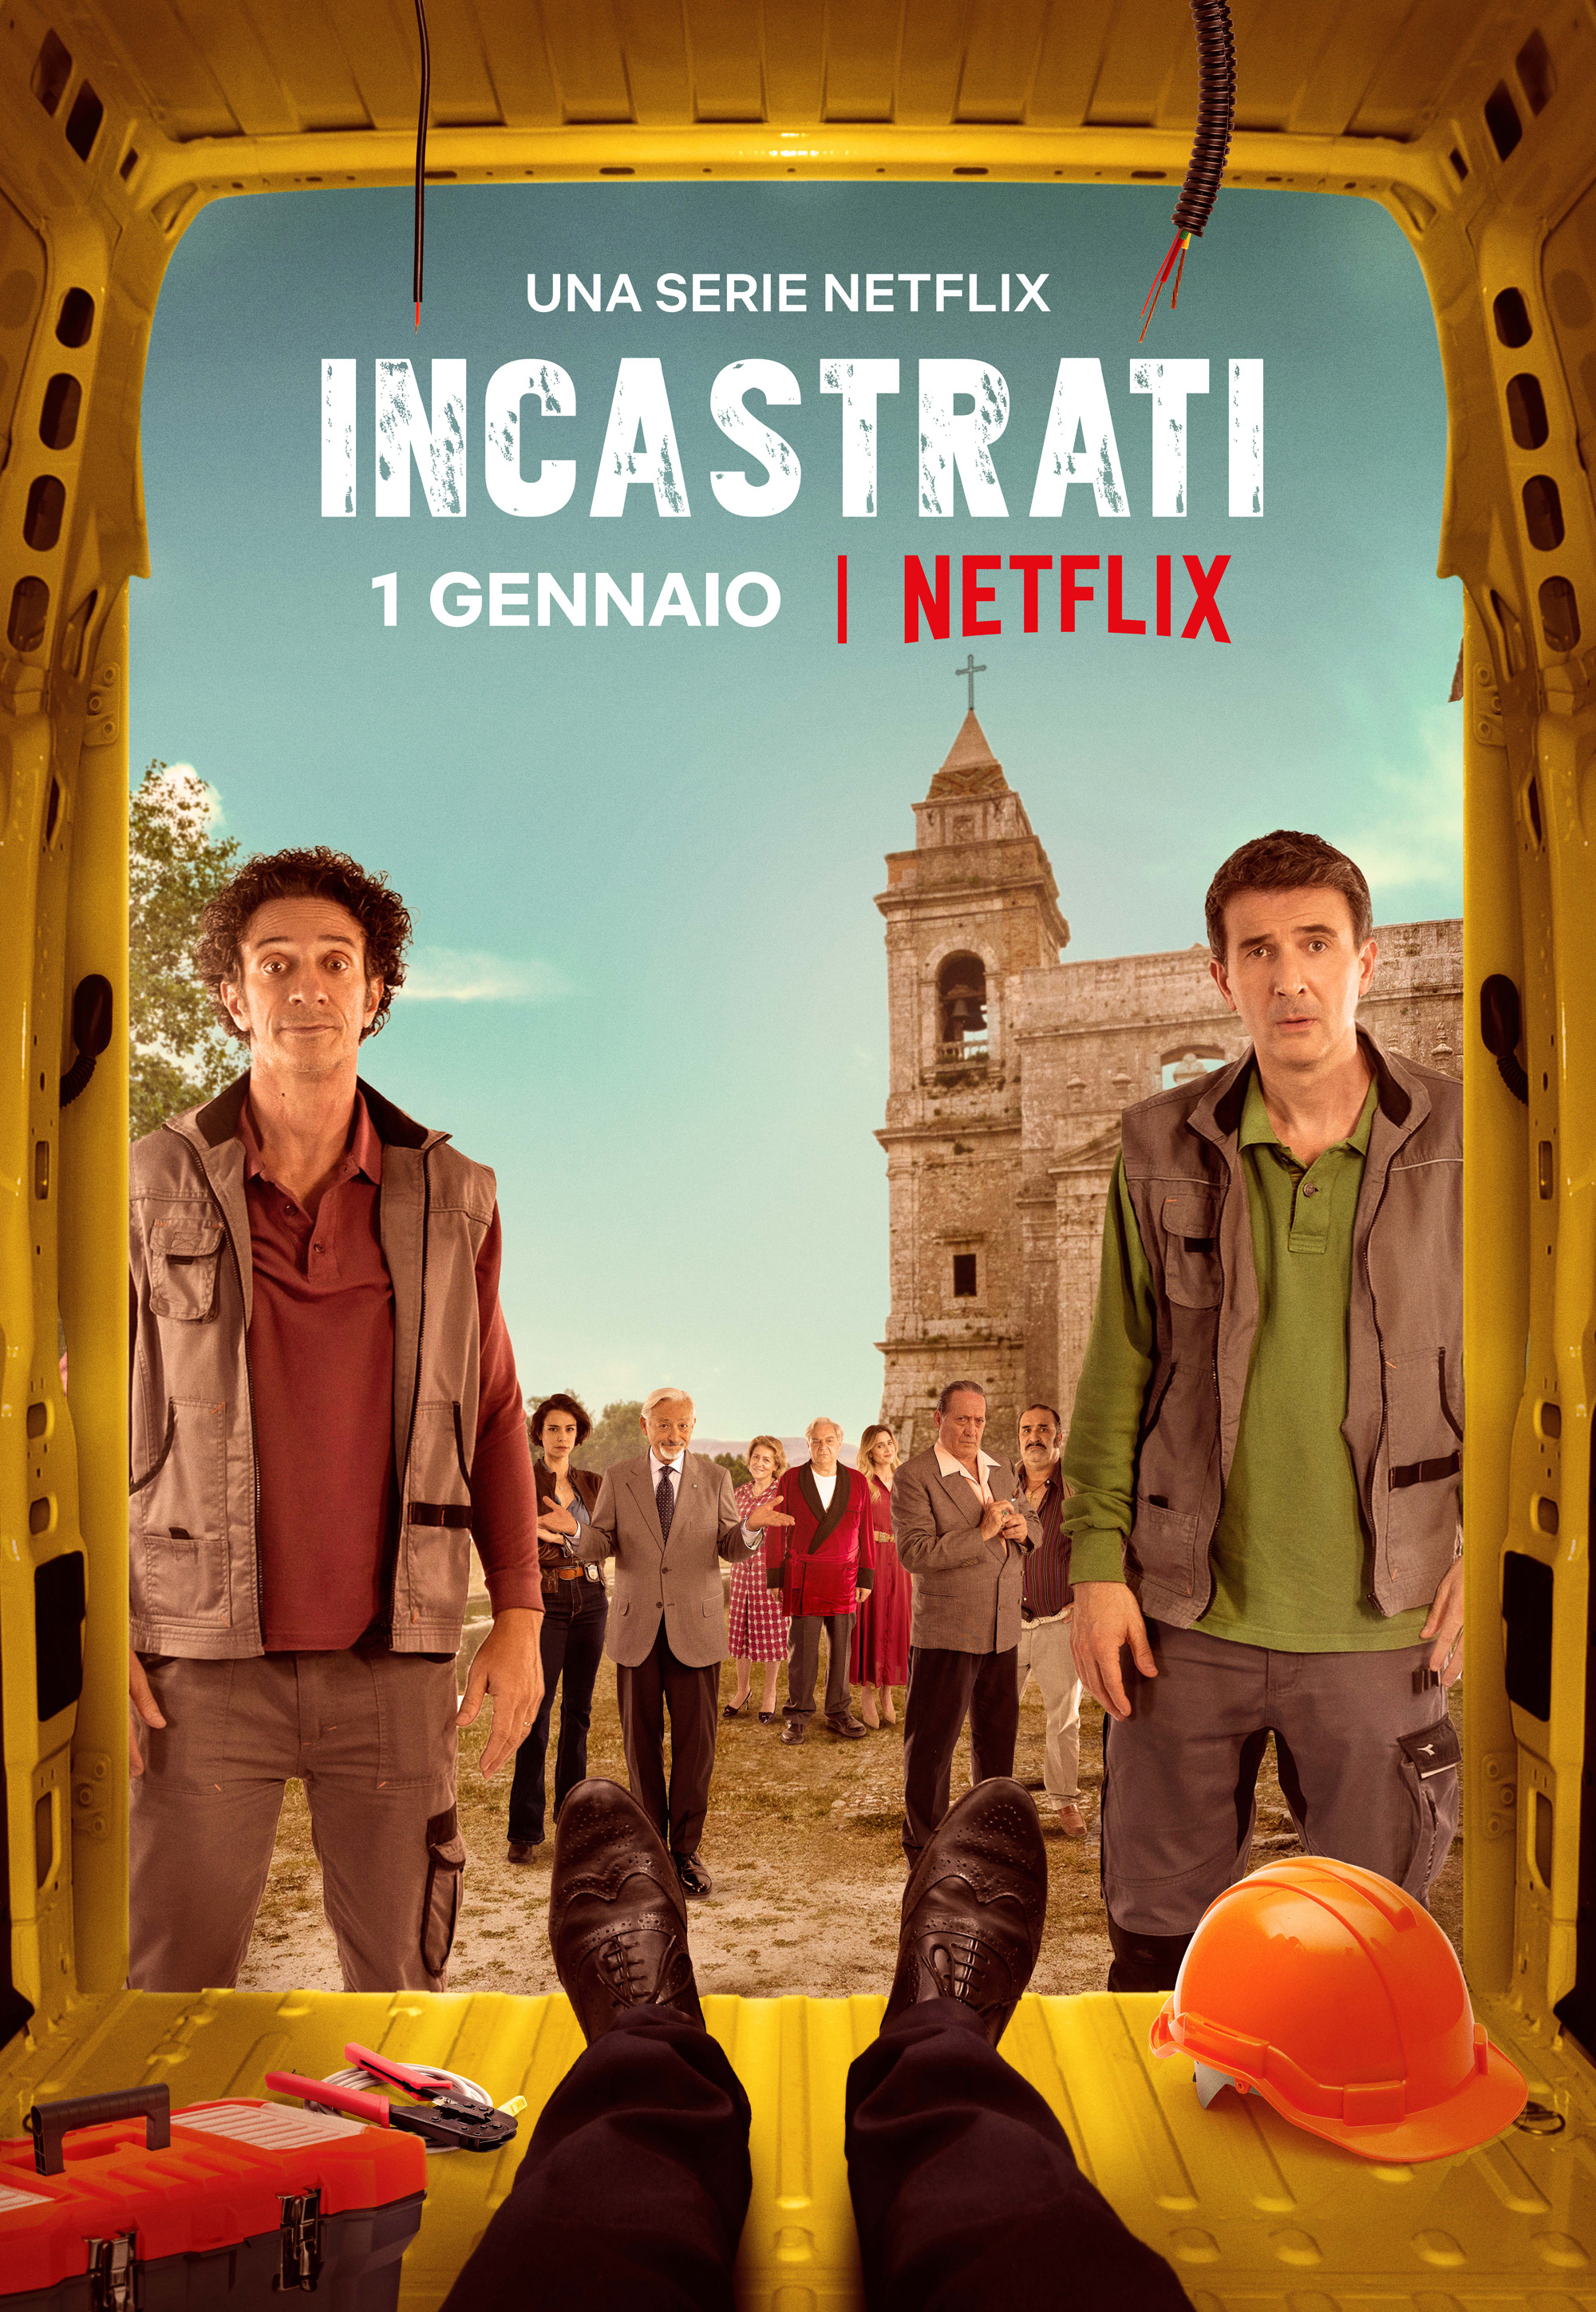 Mega Sized TV Poster Image for Incastrati (#2 of 4)